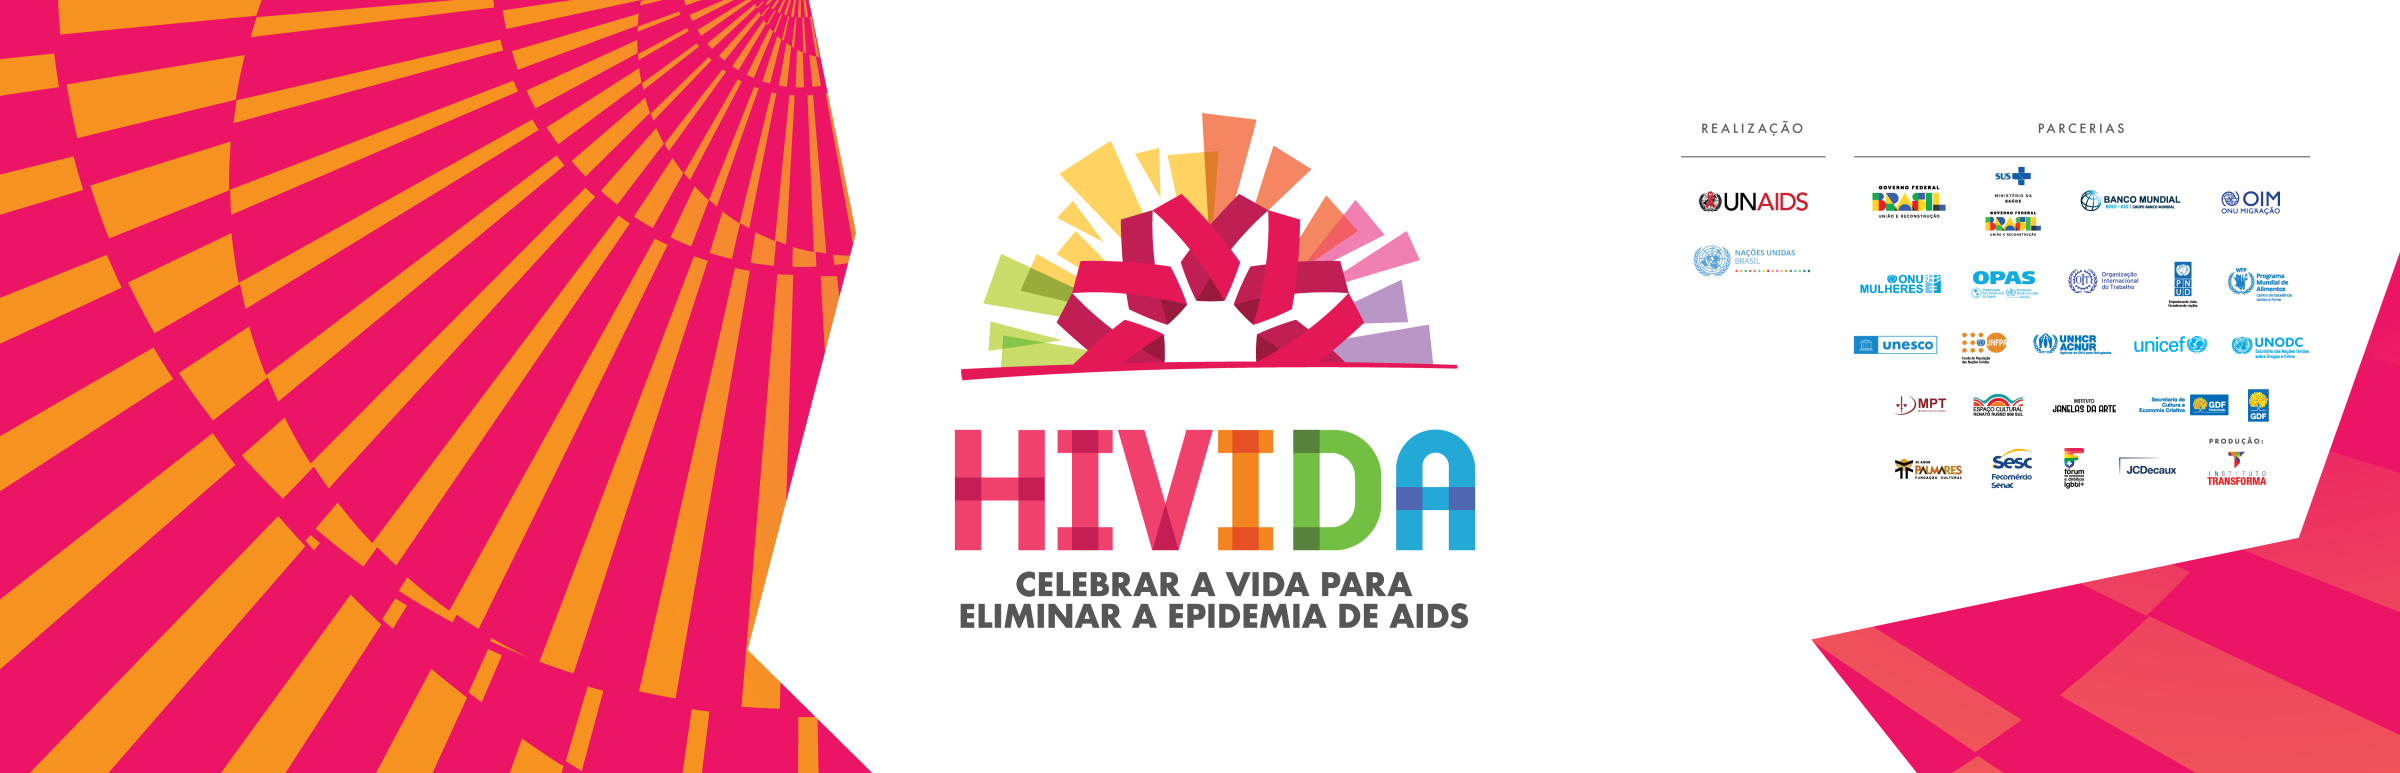 UNAIDS Arte HIVida